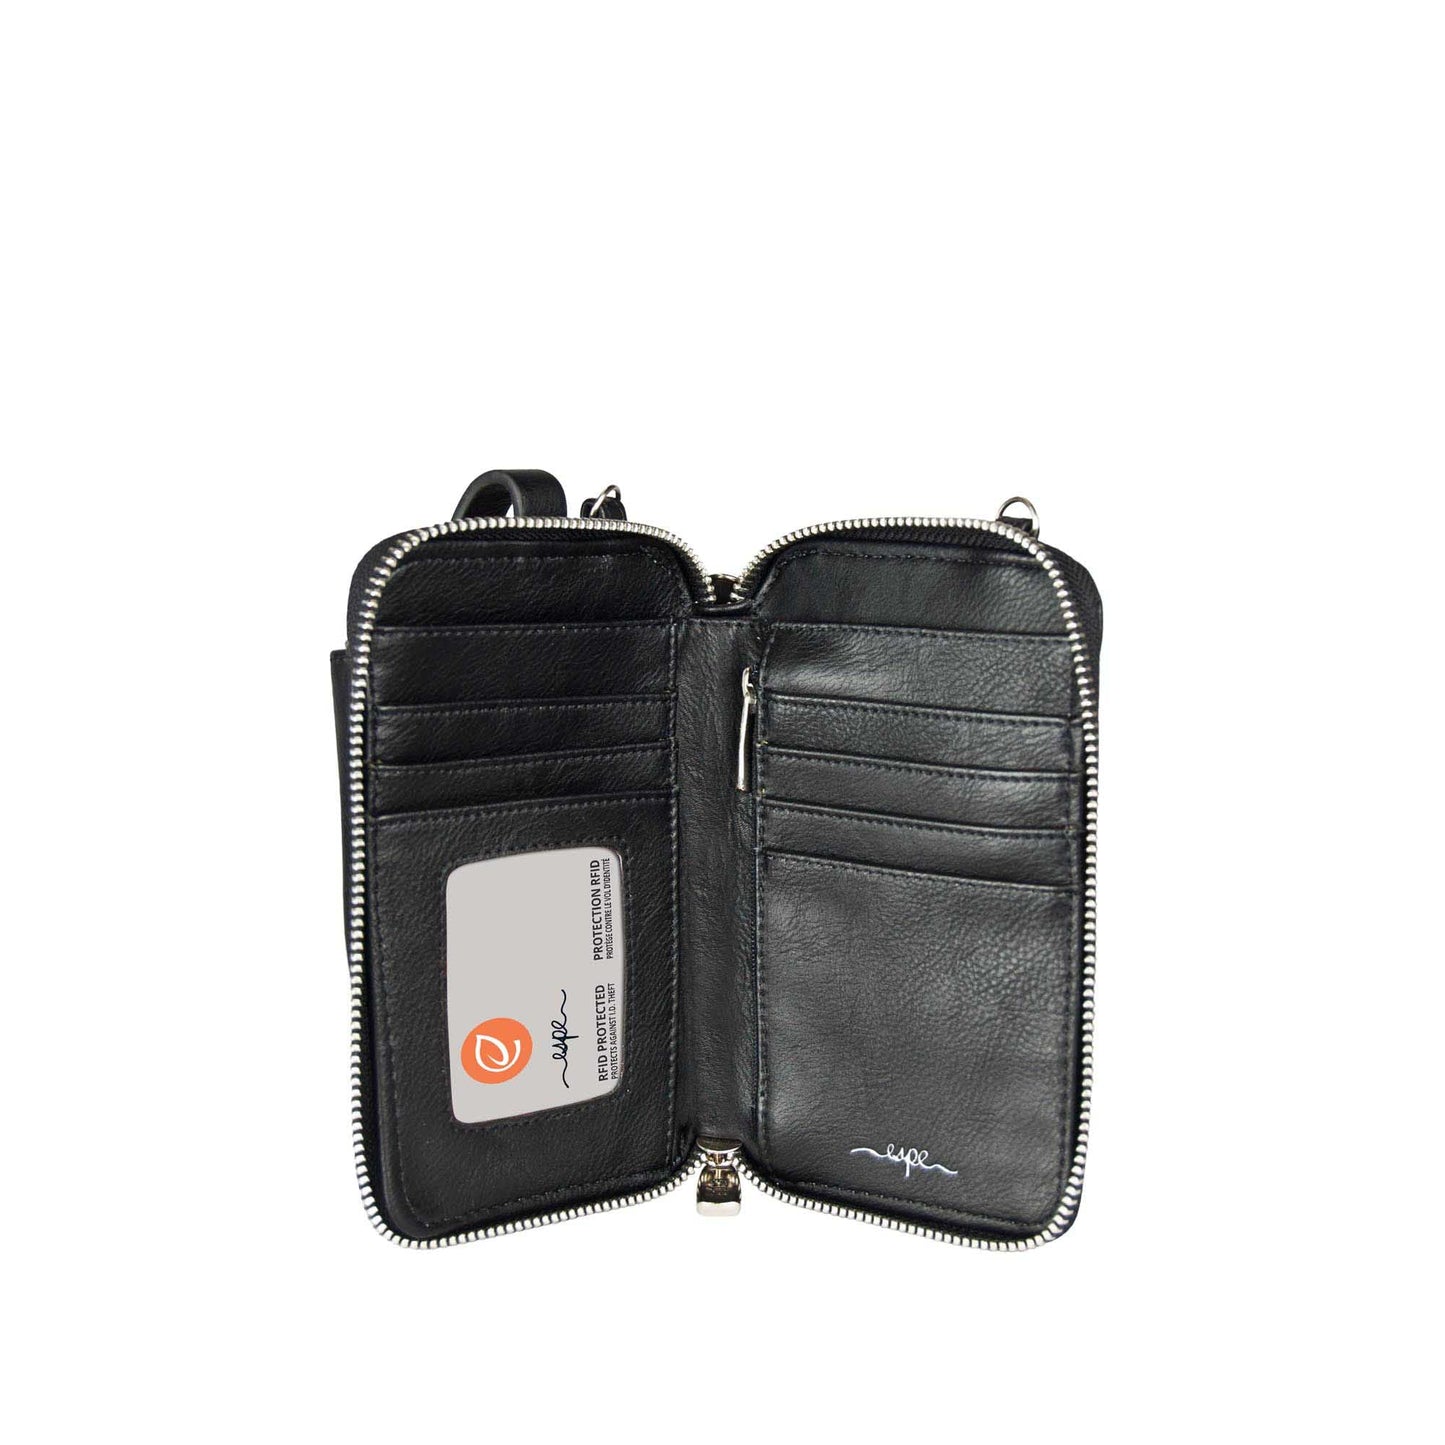 Floret Crossbody Smartphone Pouch Wallet - Black